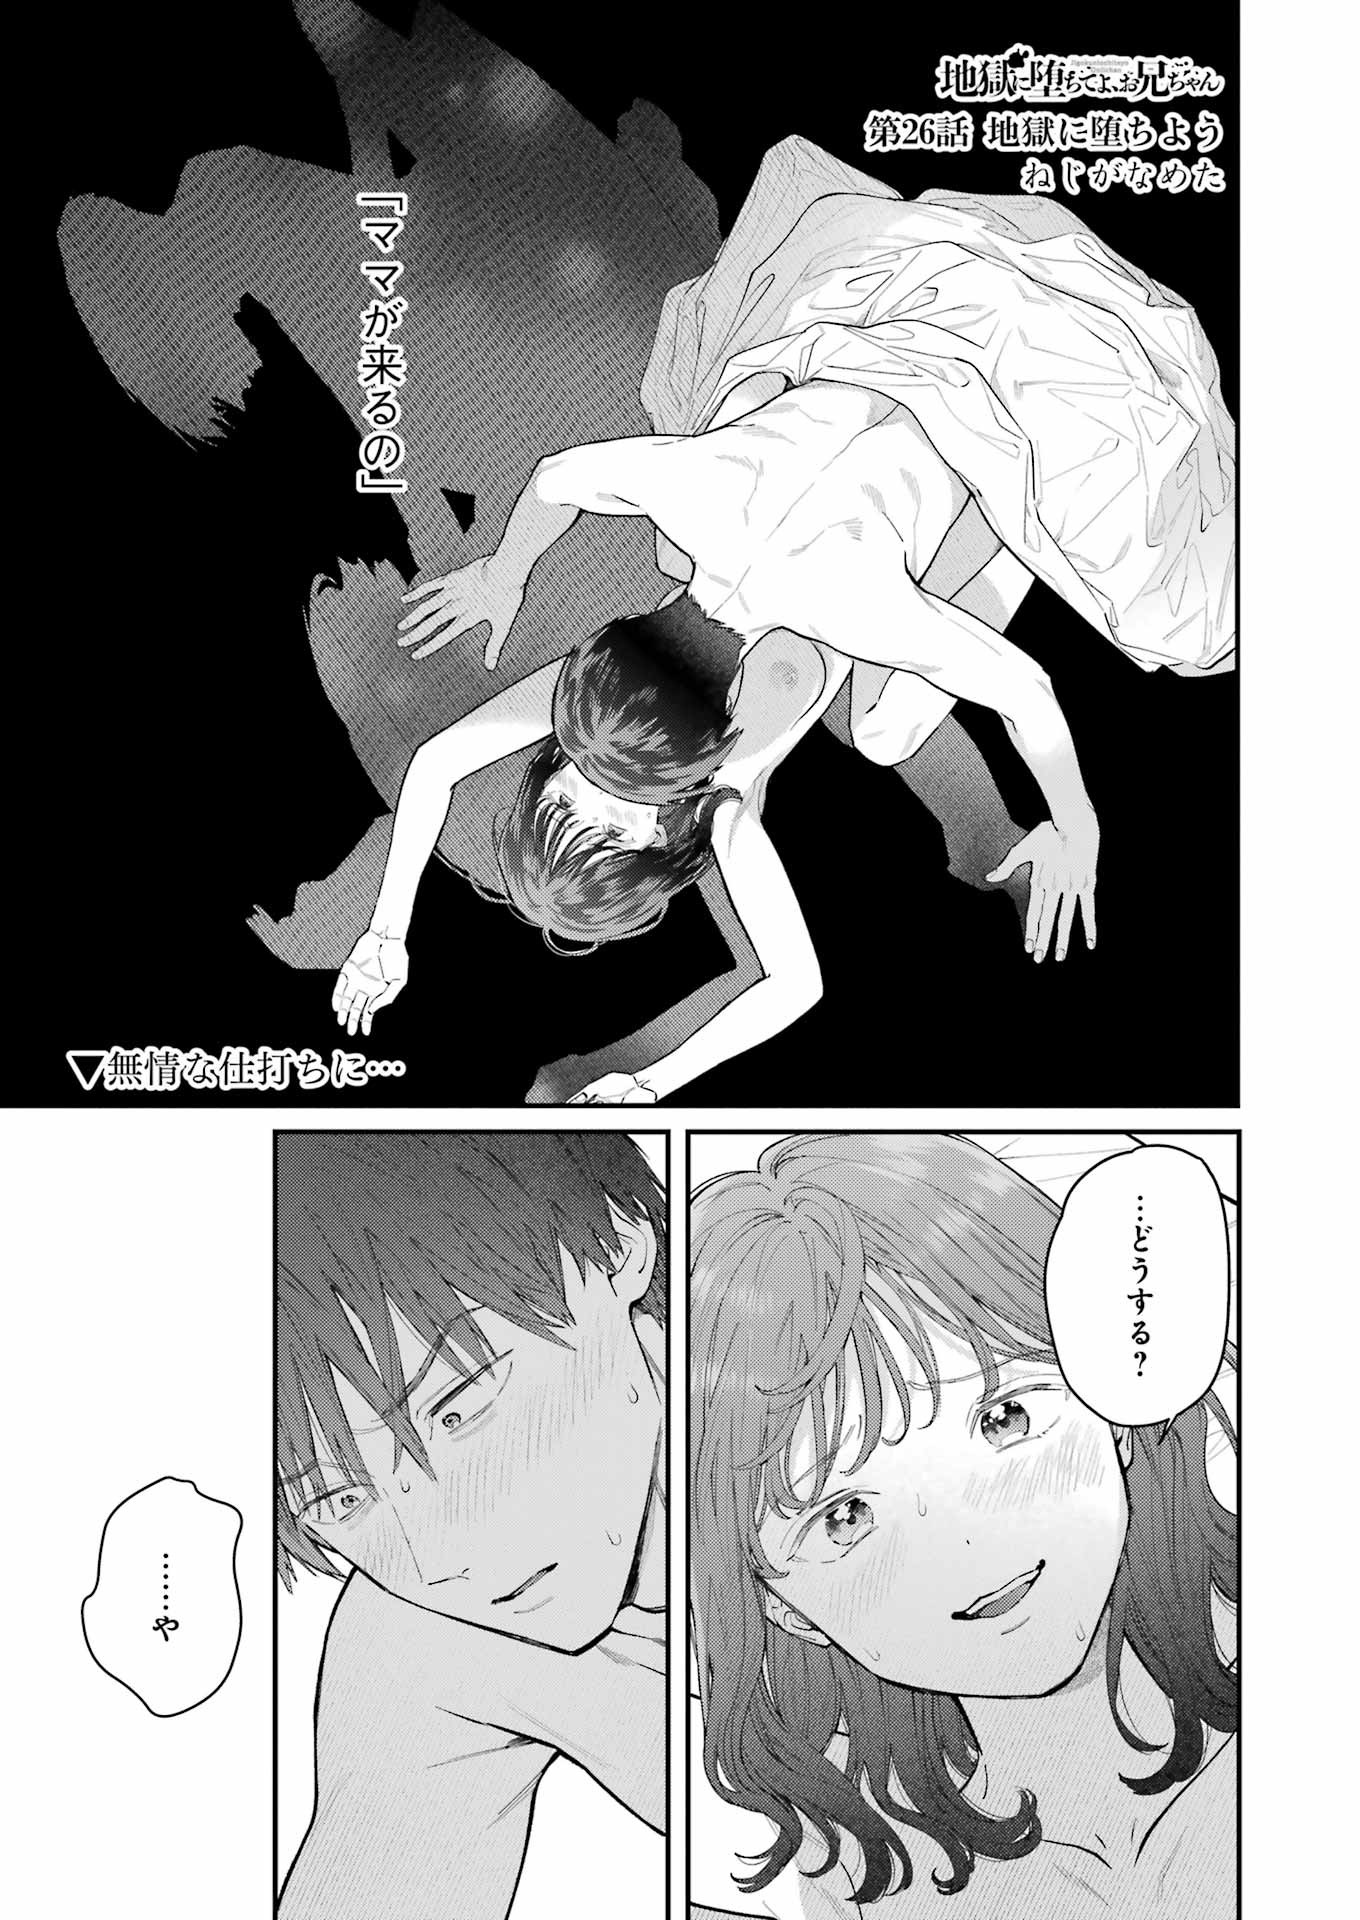 Jigoku ni Ochite yo, Onii-chan - Chapter 26 - Page 1